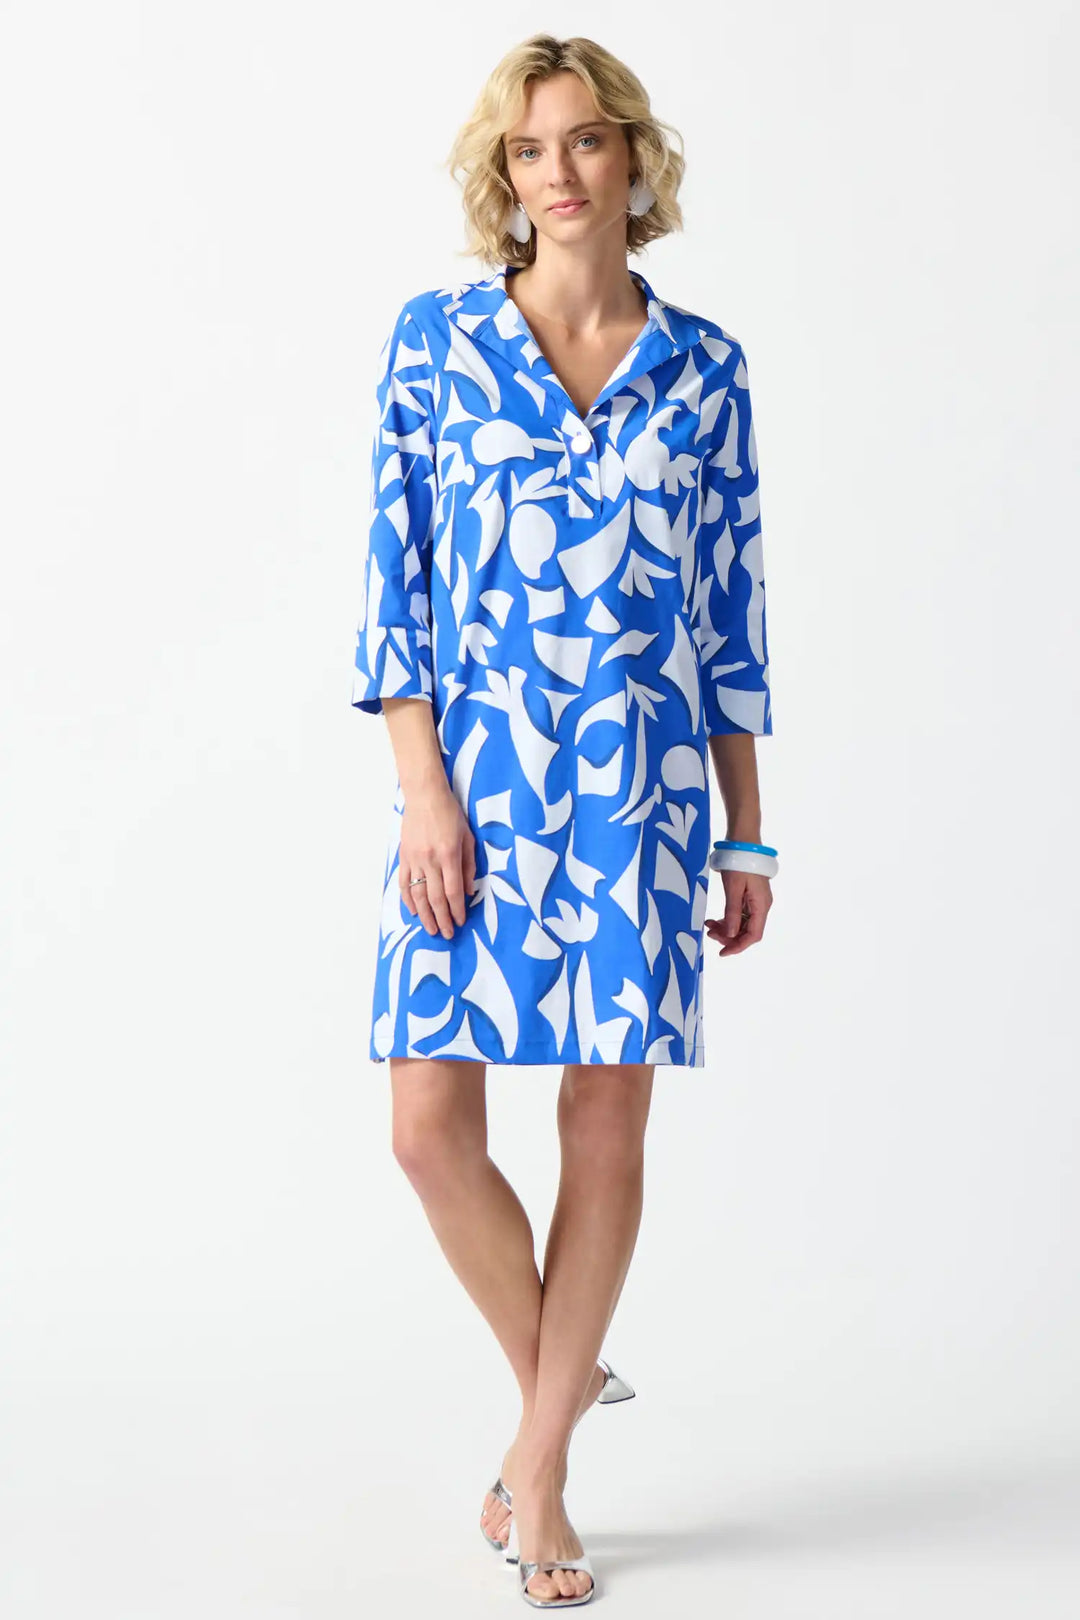 Joseph Ribkoff Blue/Vanilla Dress Style 242154-3801